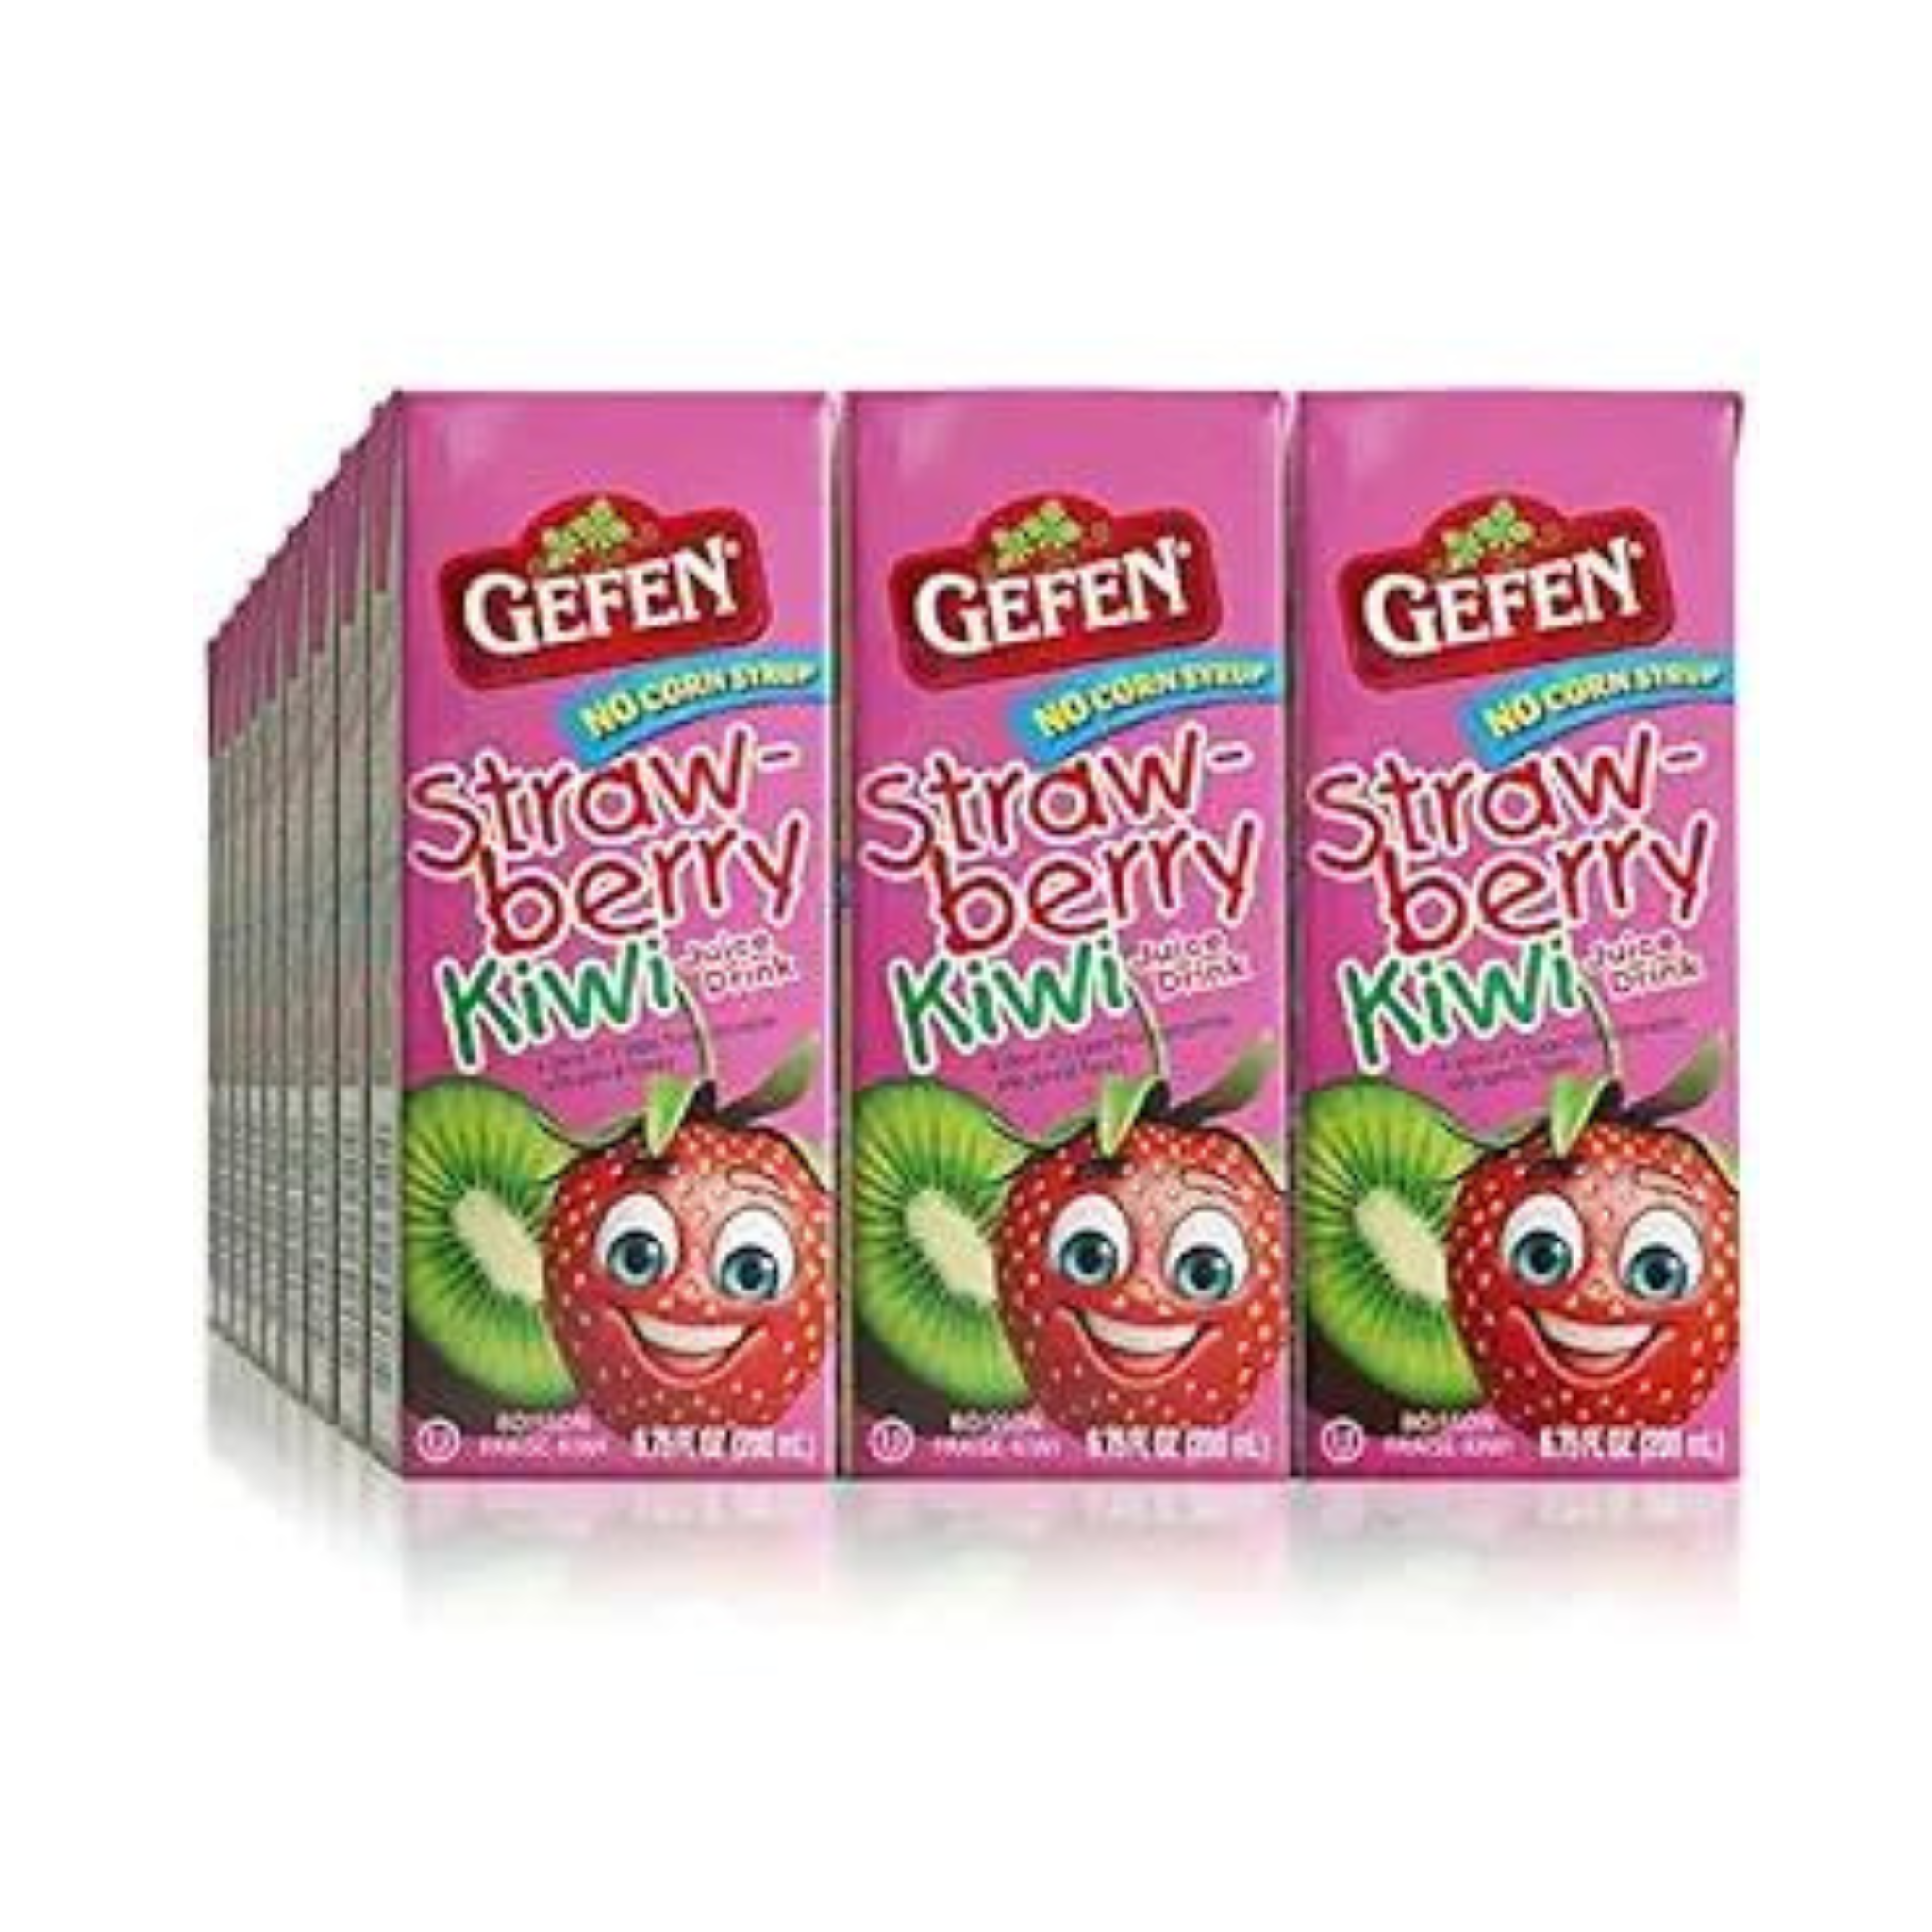 Gefen Strawberry Kiwi Juice Box, 27 Pack